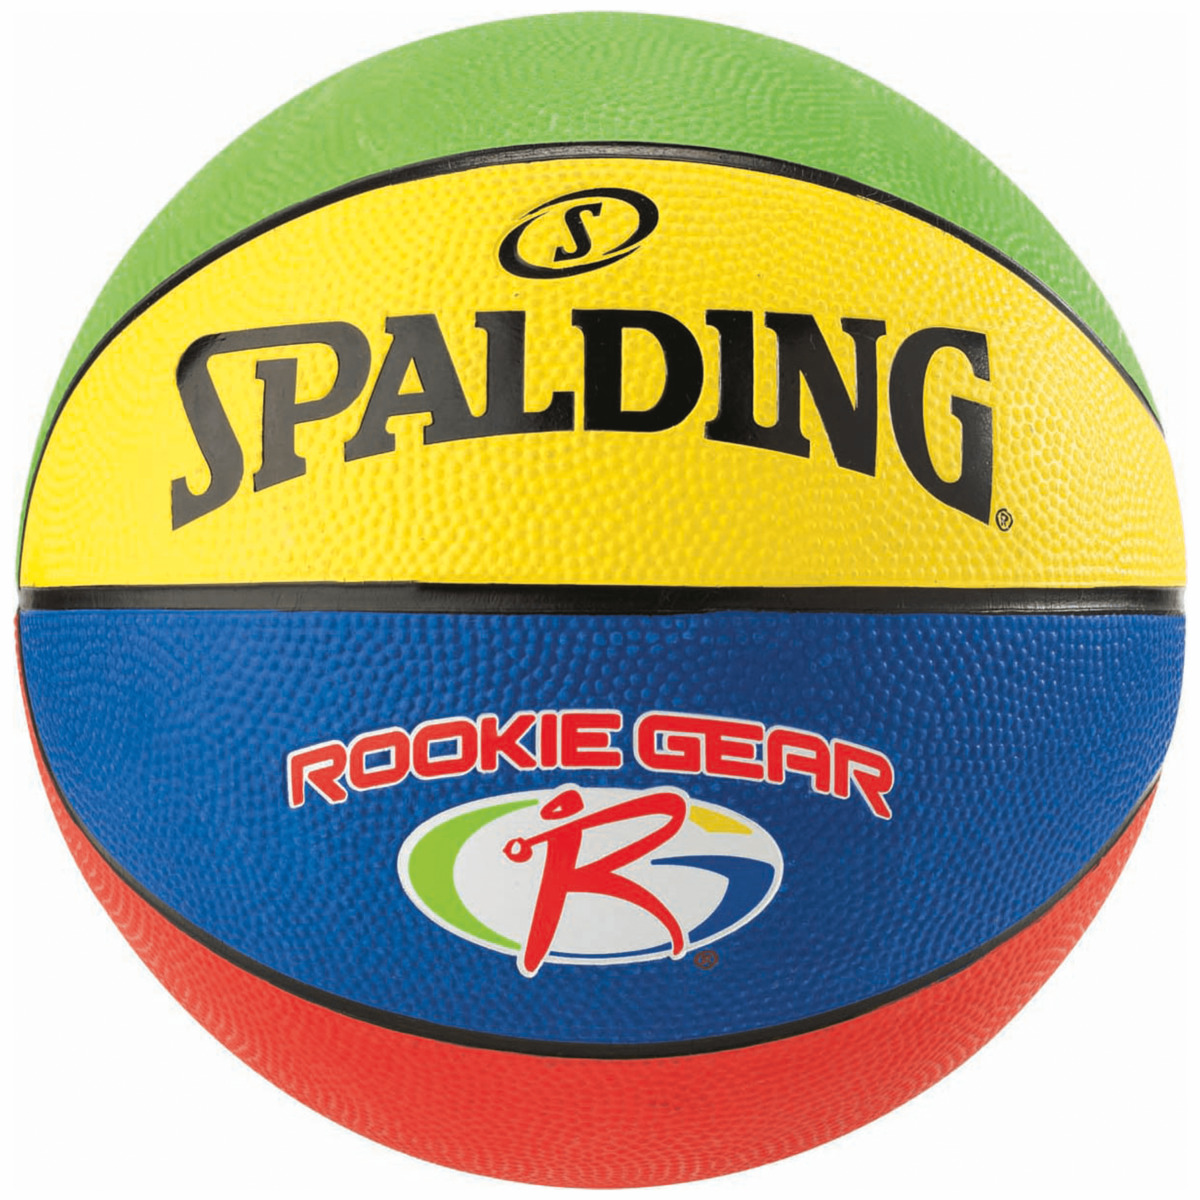 Spalding Basketball Rookie Gear Size 5